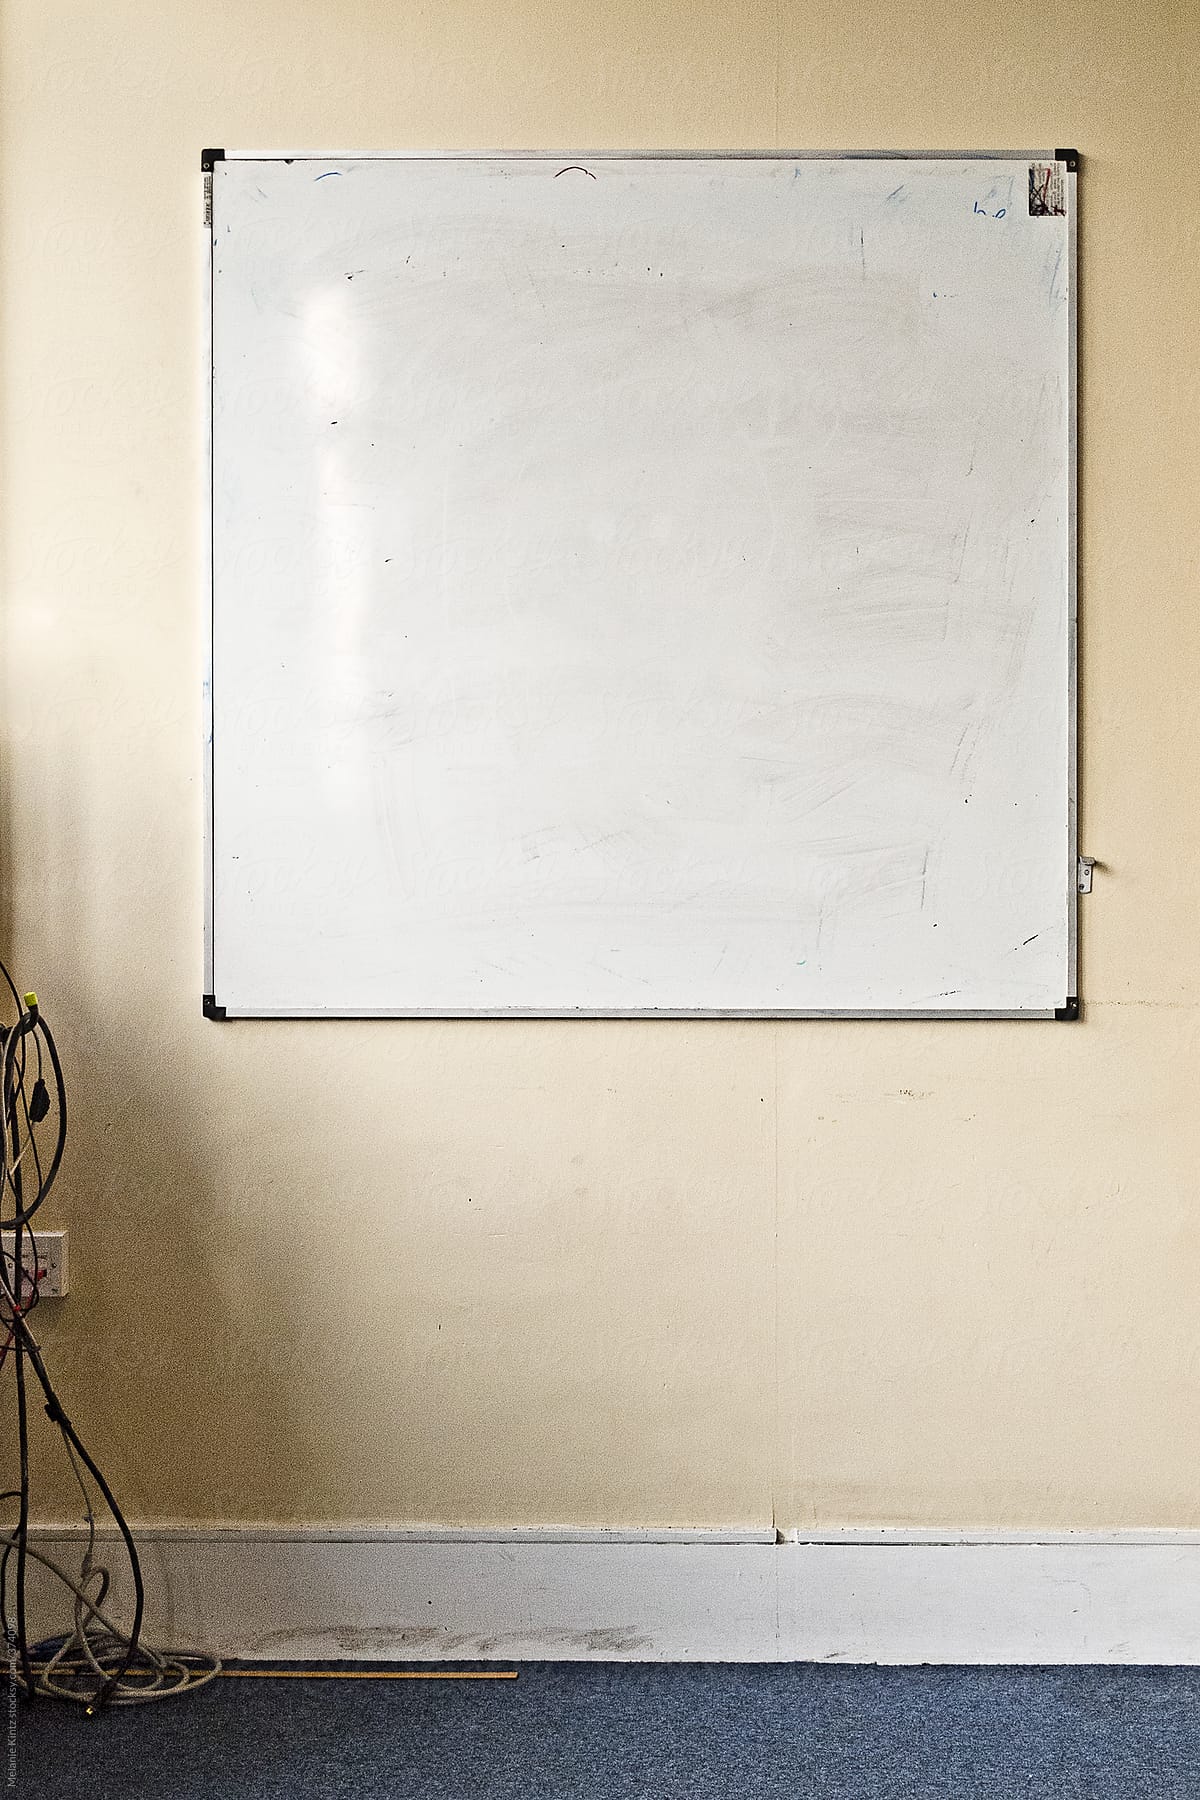 Dirty whiteboard in classroom